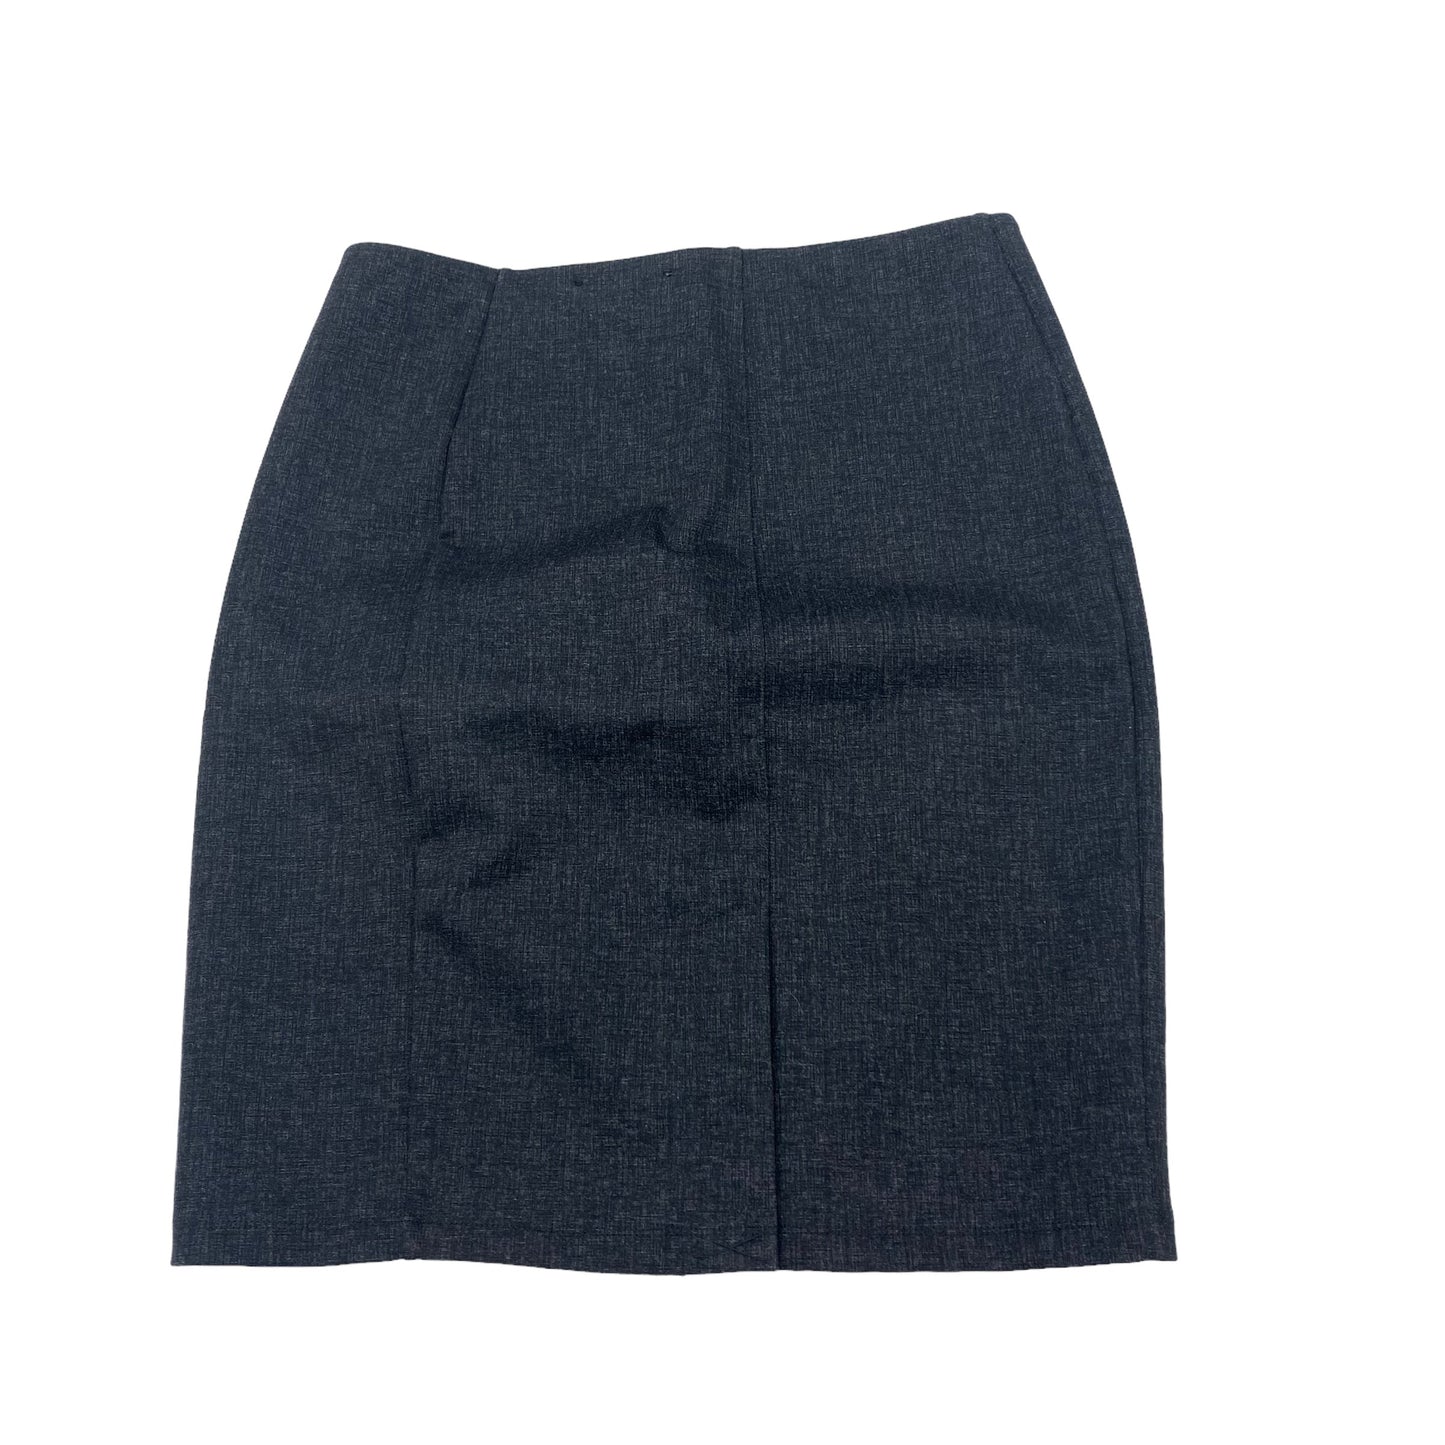 Skirt Mini & Short By Liverpool  Size: 8petite